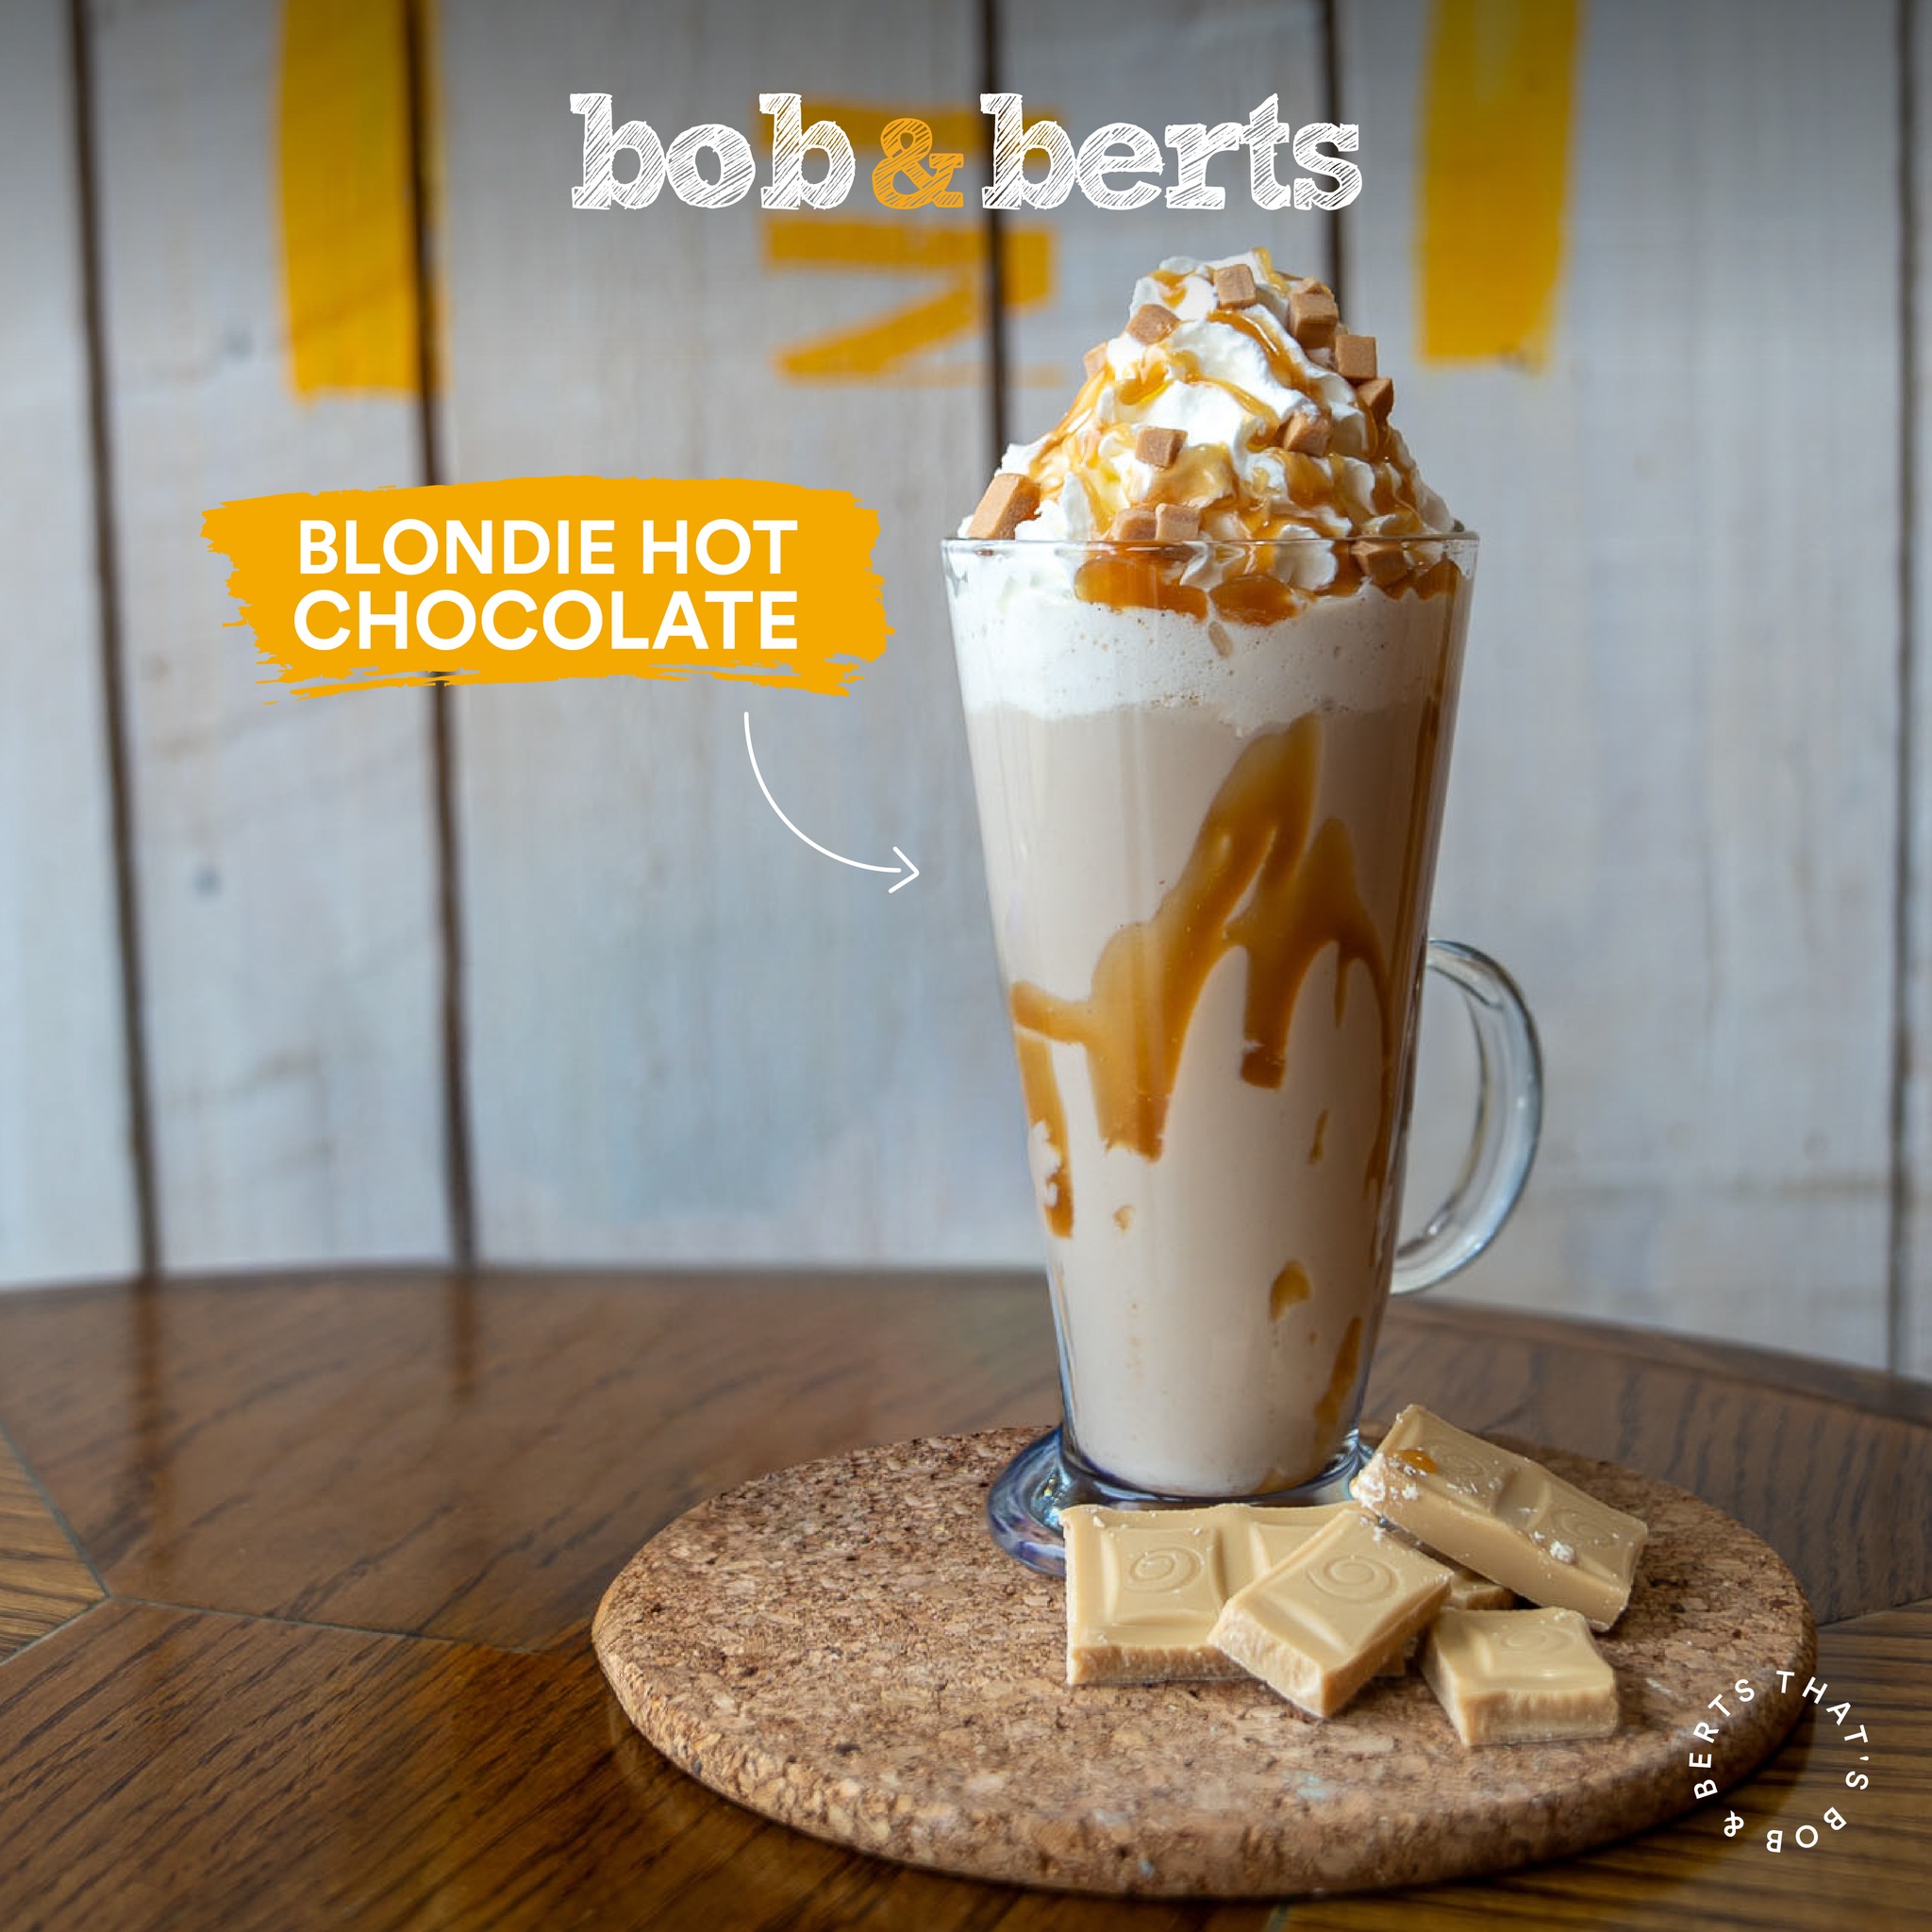 Blondie Hot Chocolate at Bob & Berts